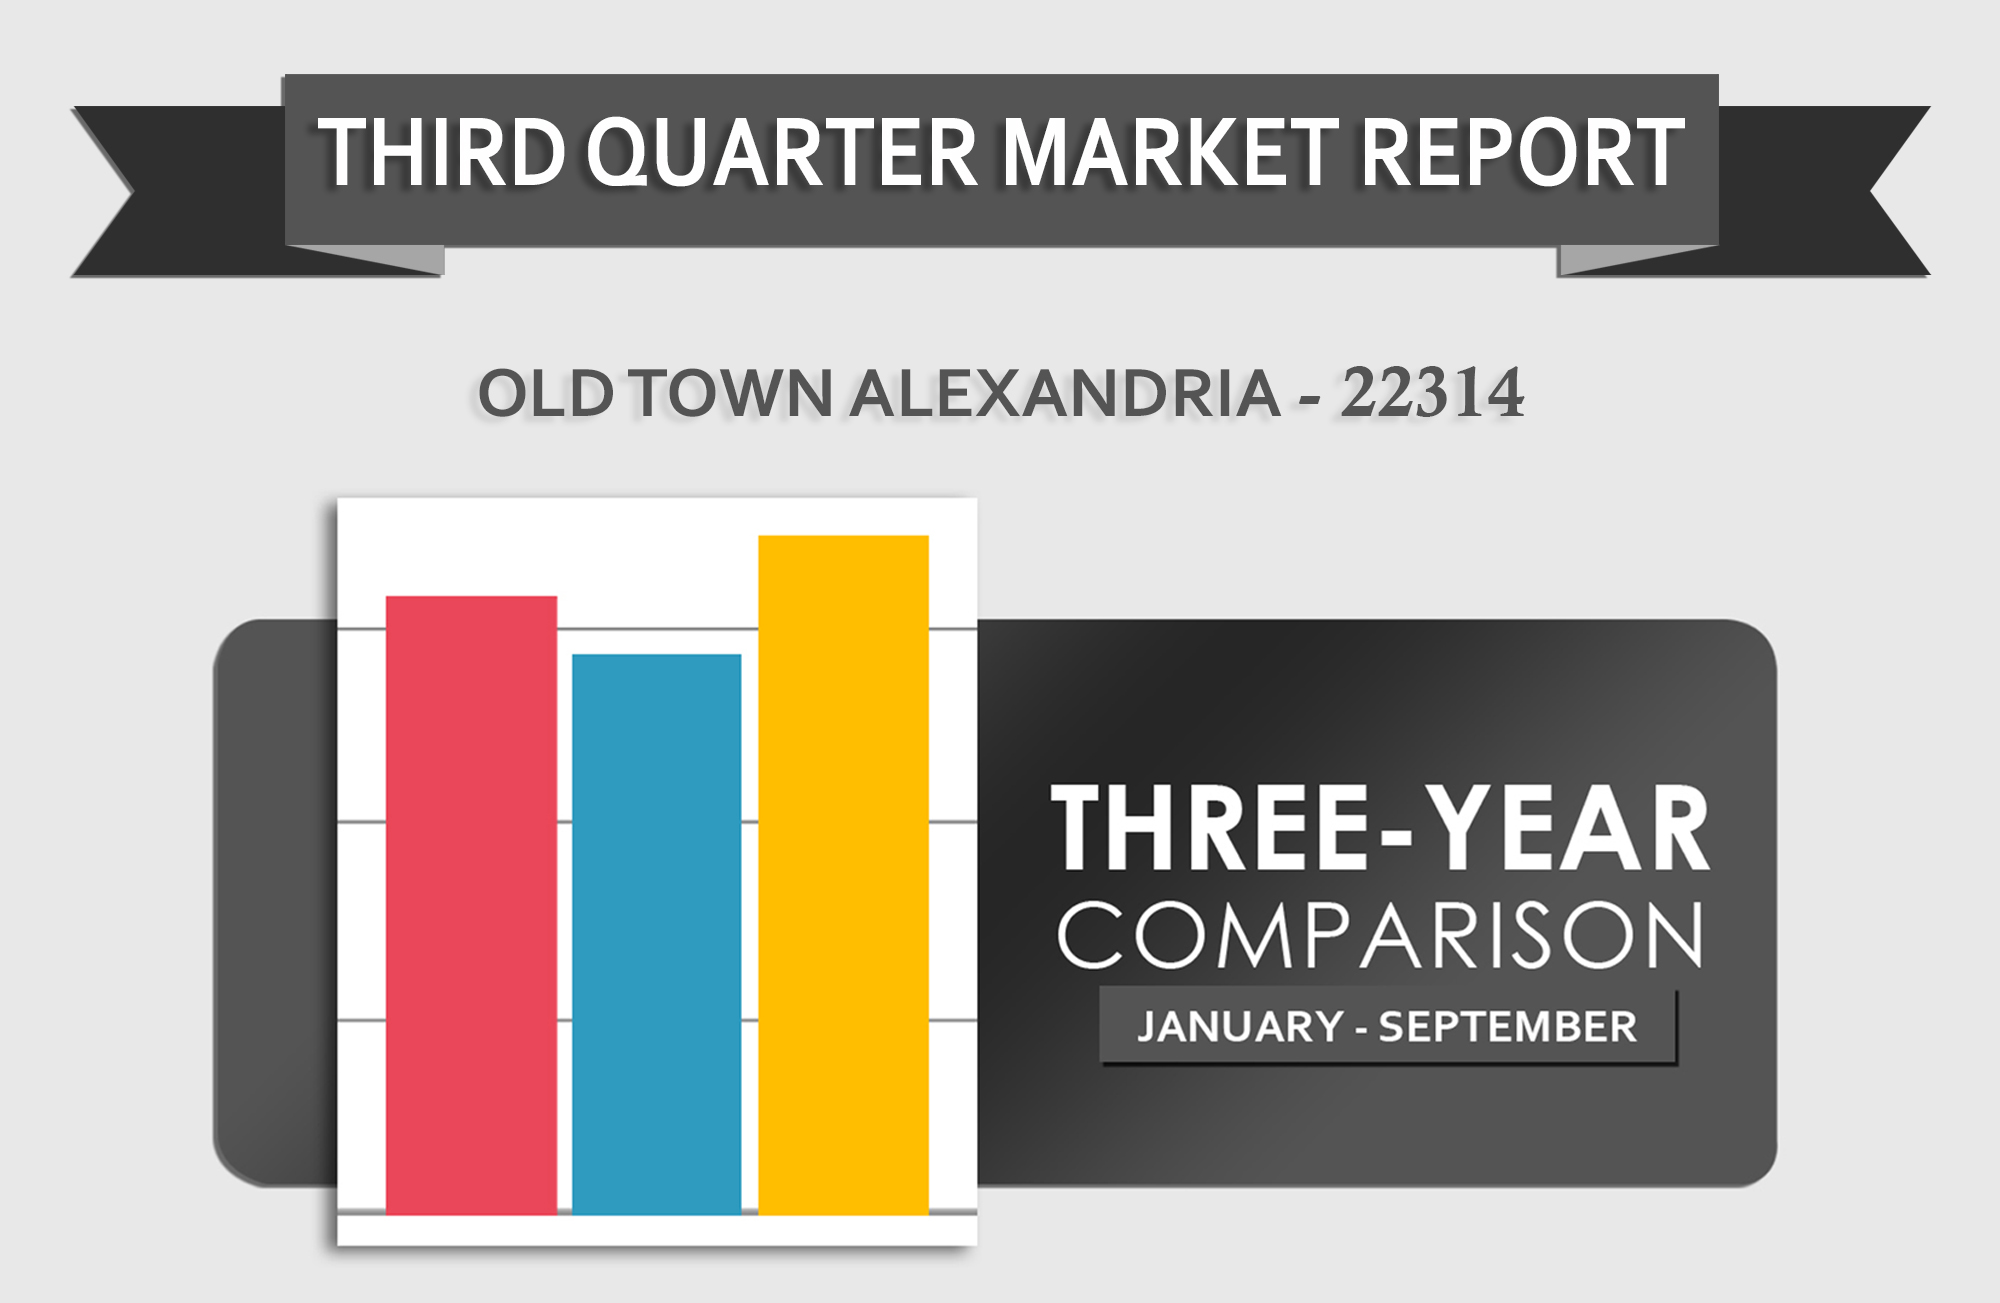 Old Town Alexandria (22314) – Third Quarter Report